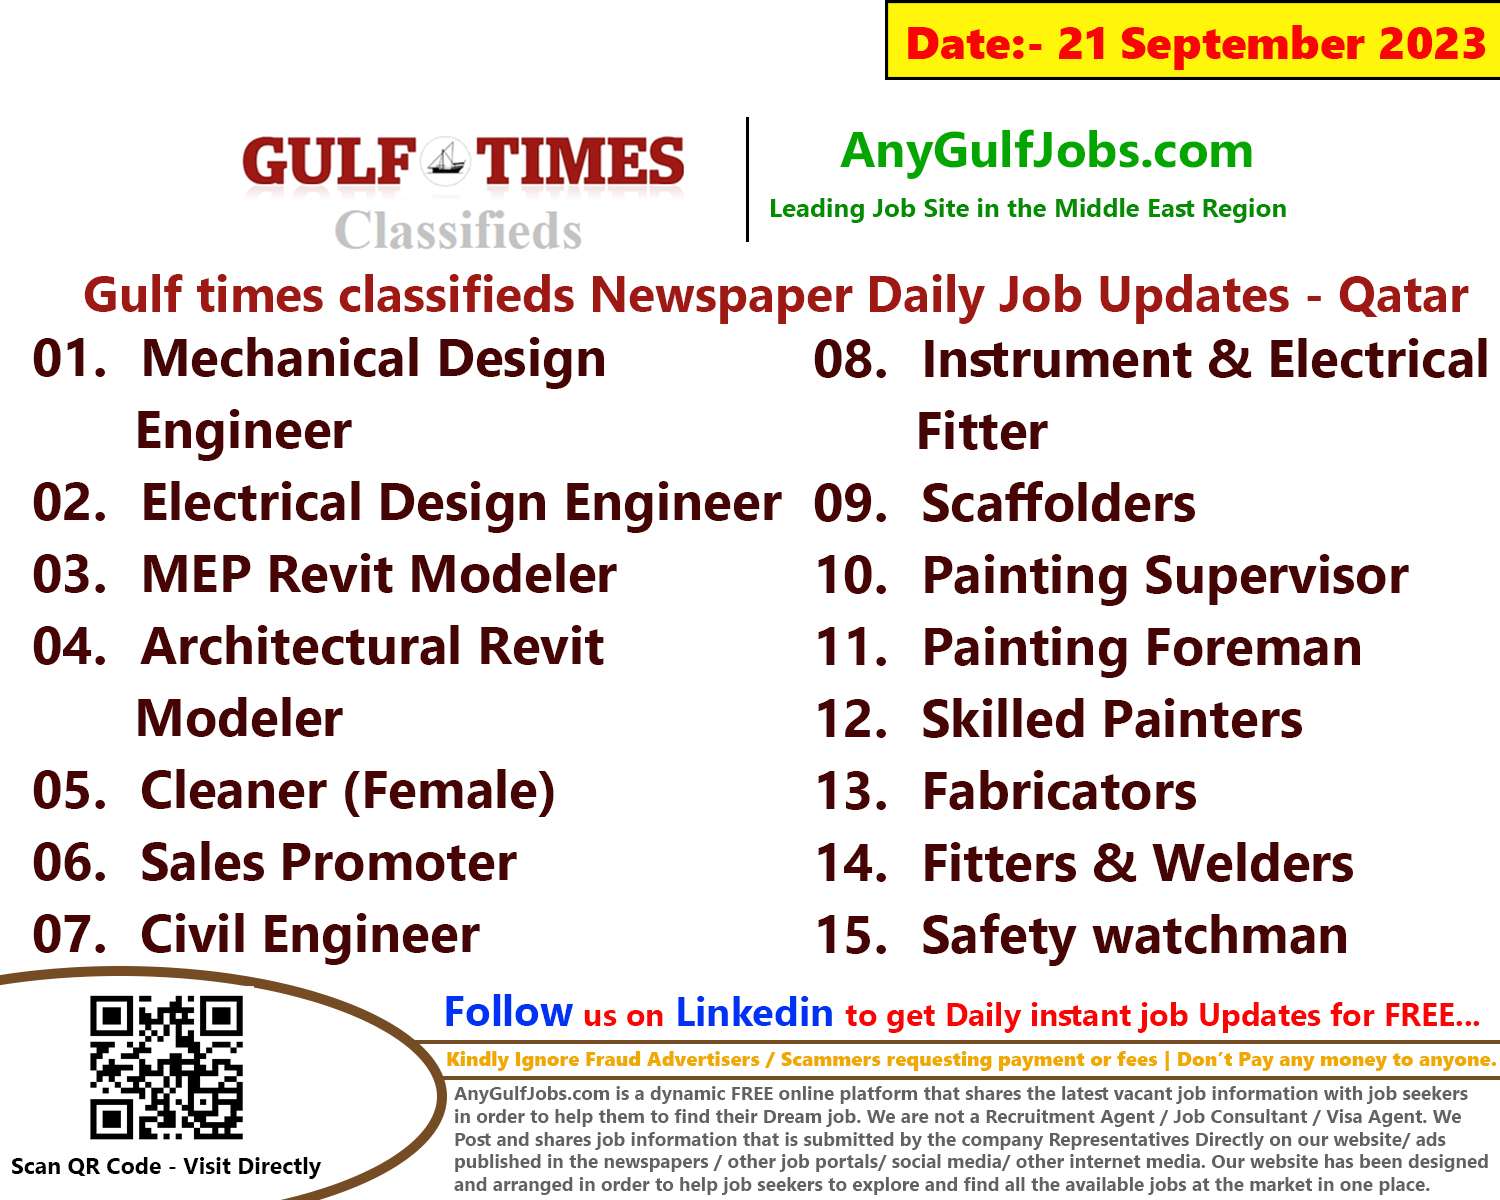 Gulf times classifieds Job Vacancies Qatar - 21 September 2023